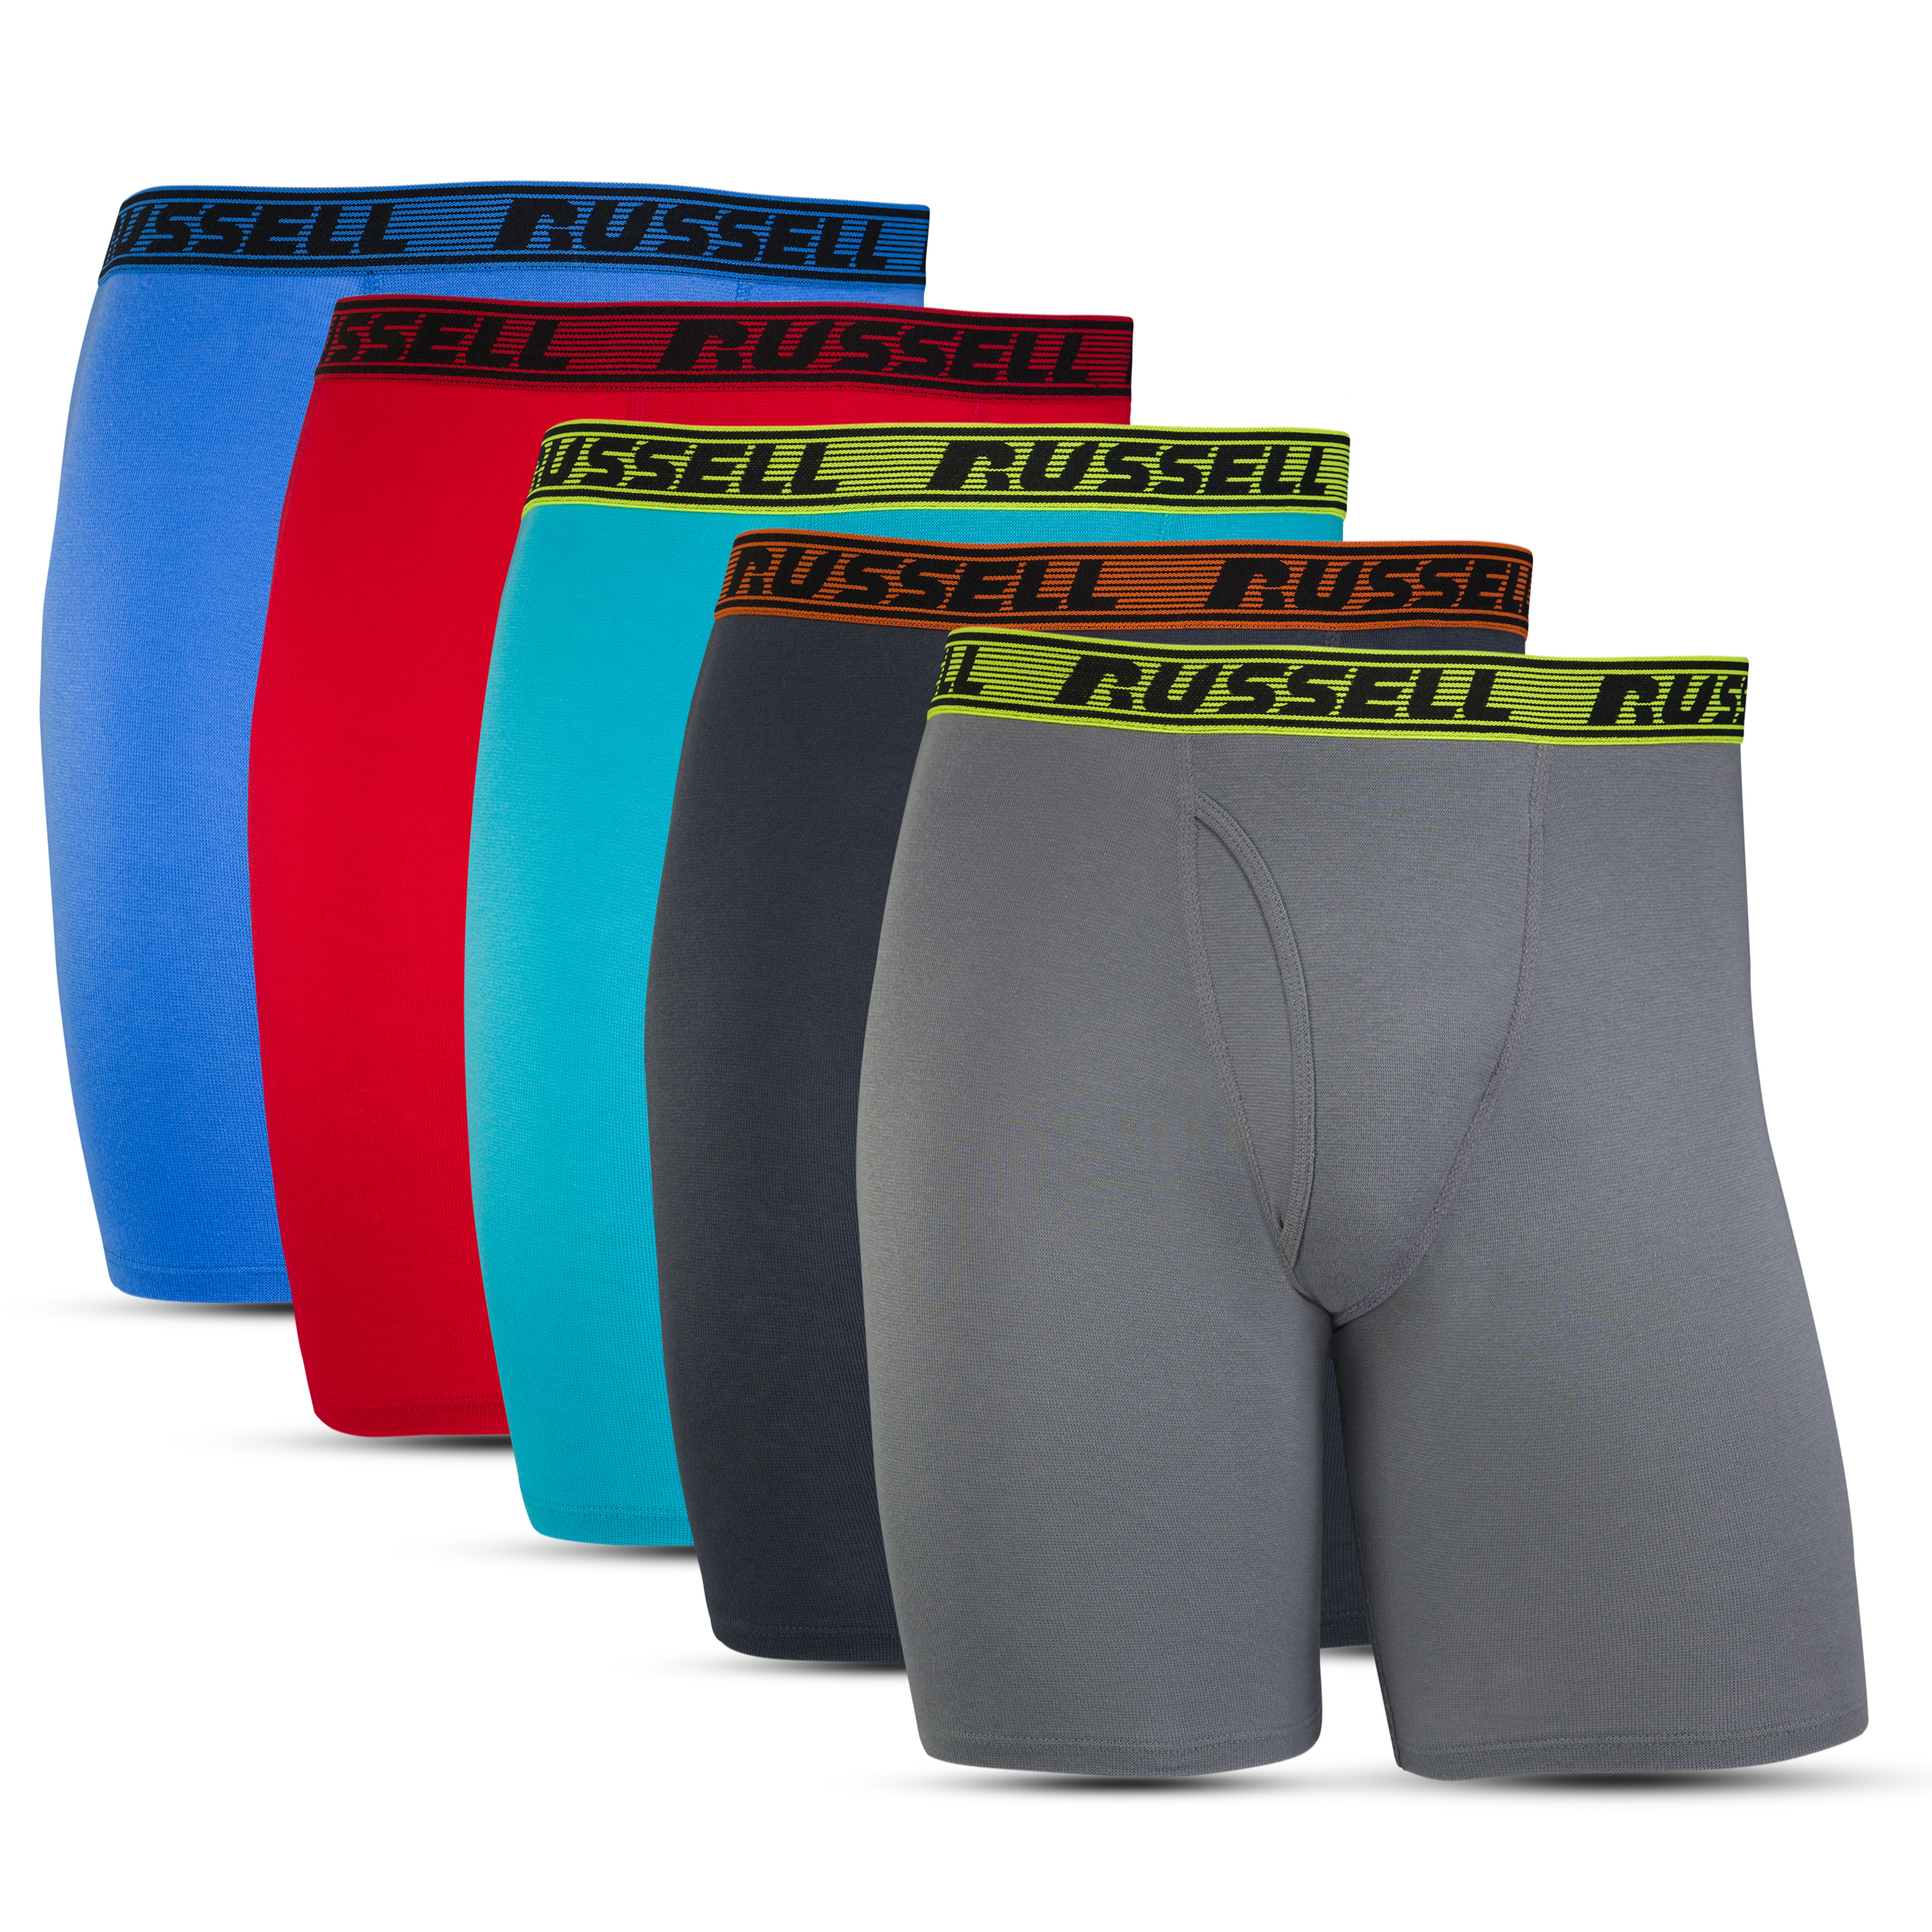 Russell Athletic, Underwear & Socks, Russell Freshforce Performance  Underwear Size Xxl